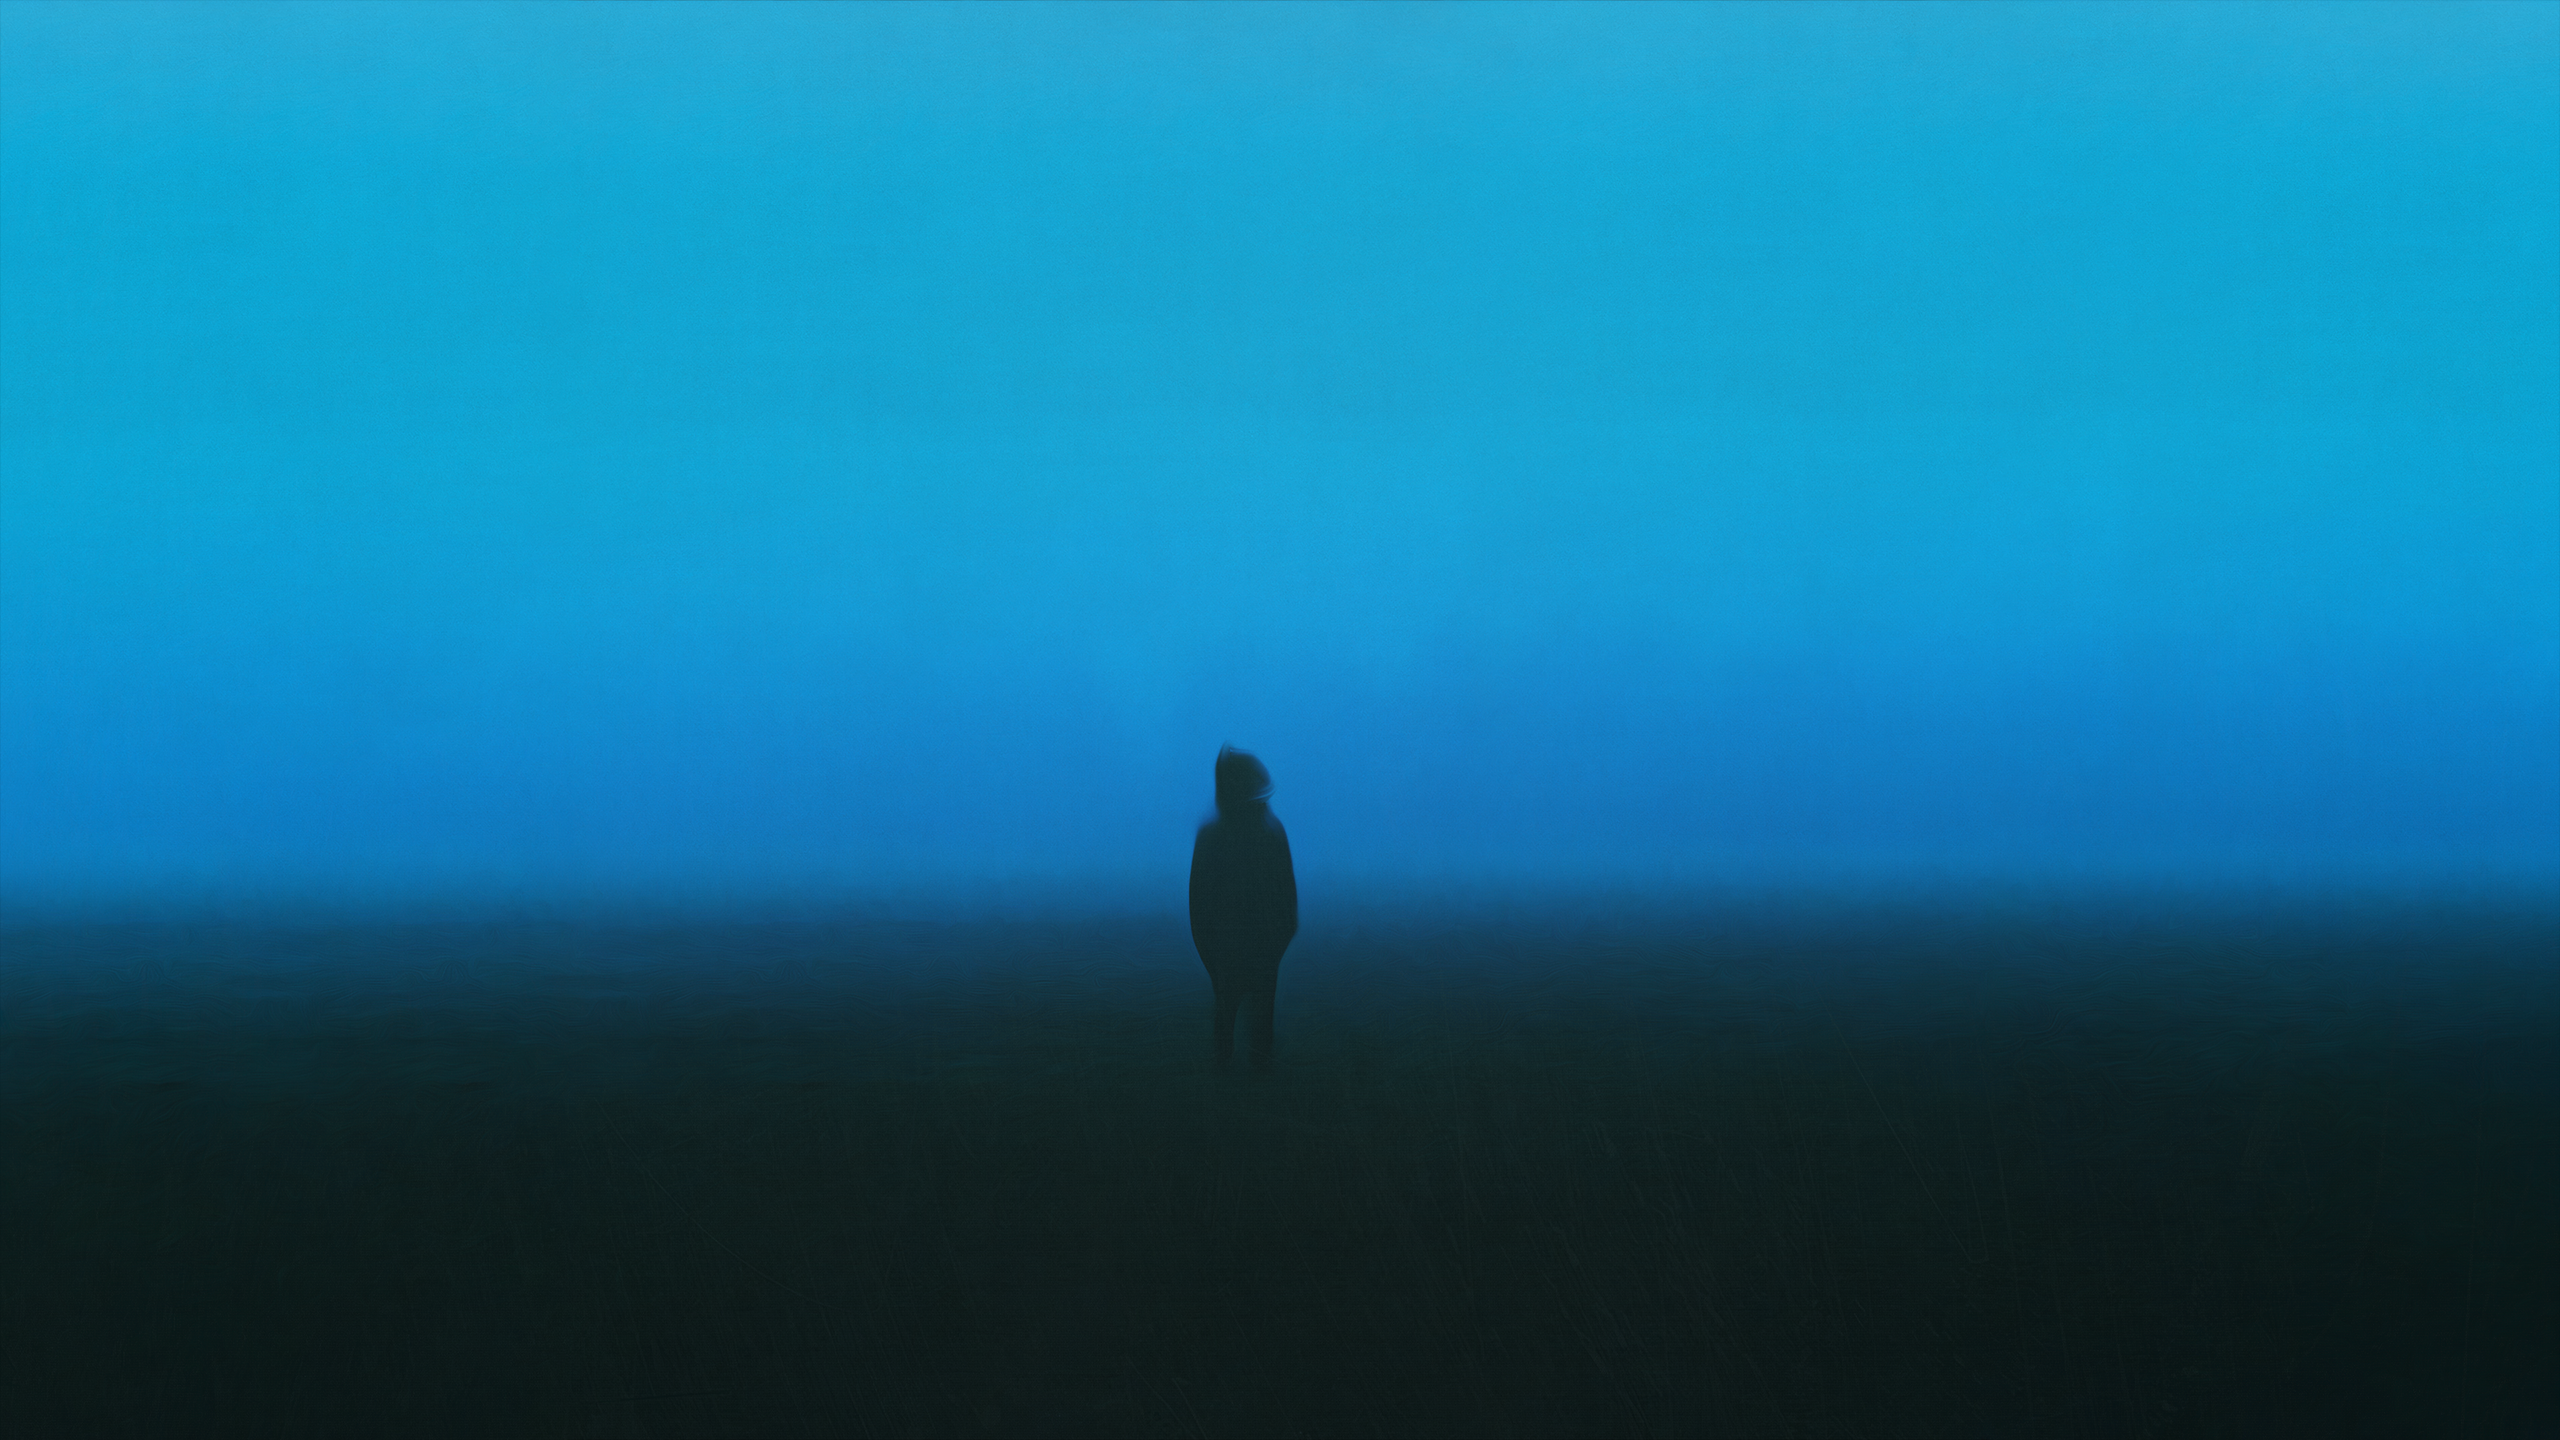 General 2560x1440 midnight night simple background dark loneliness alone horror sky oil painting depressing sadness sad